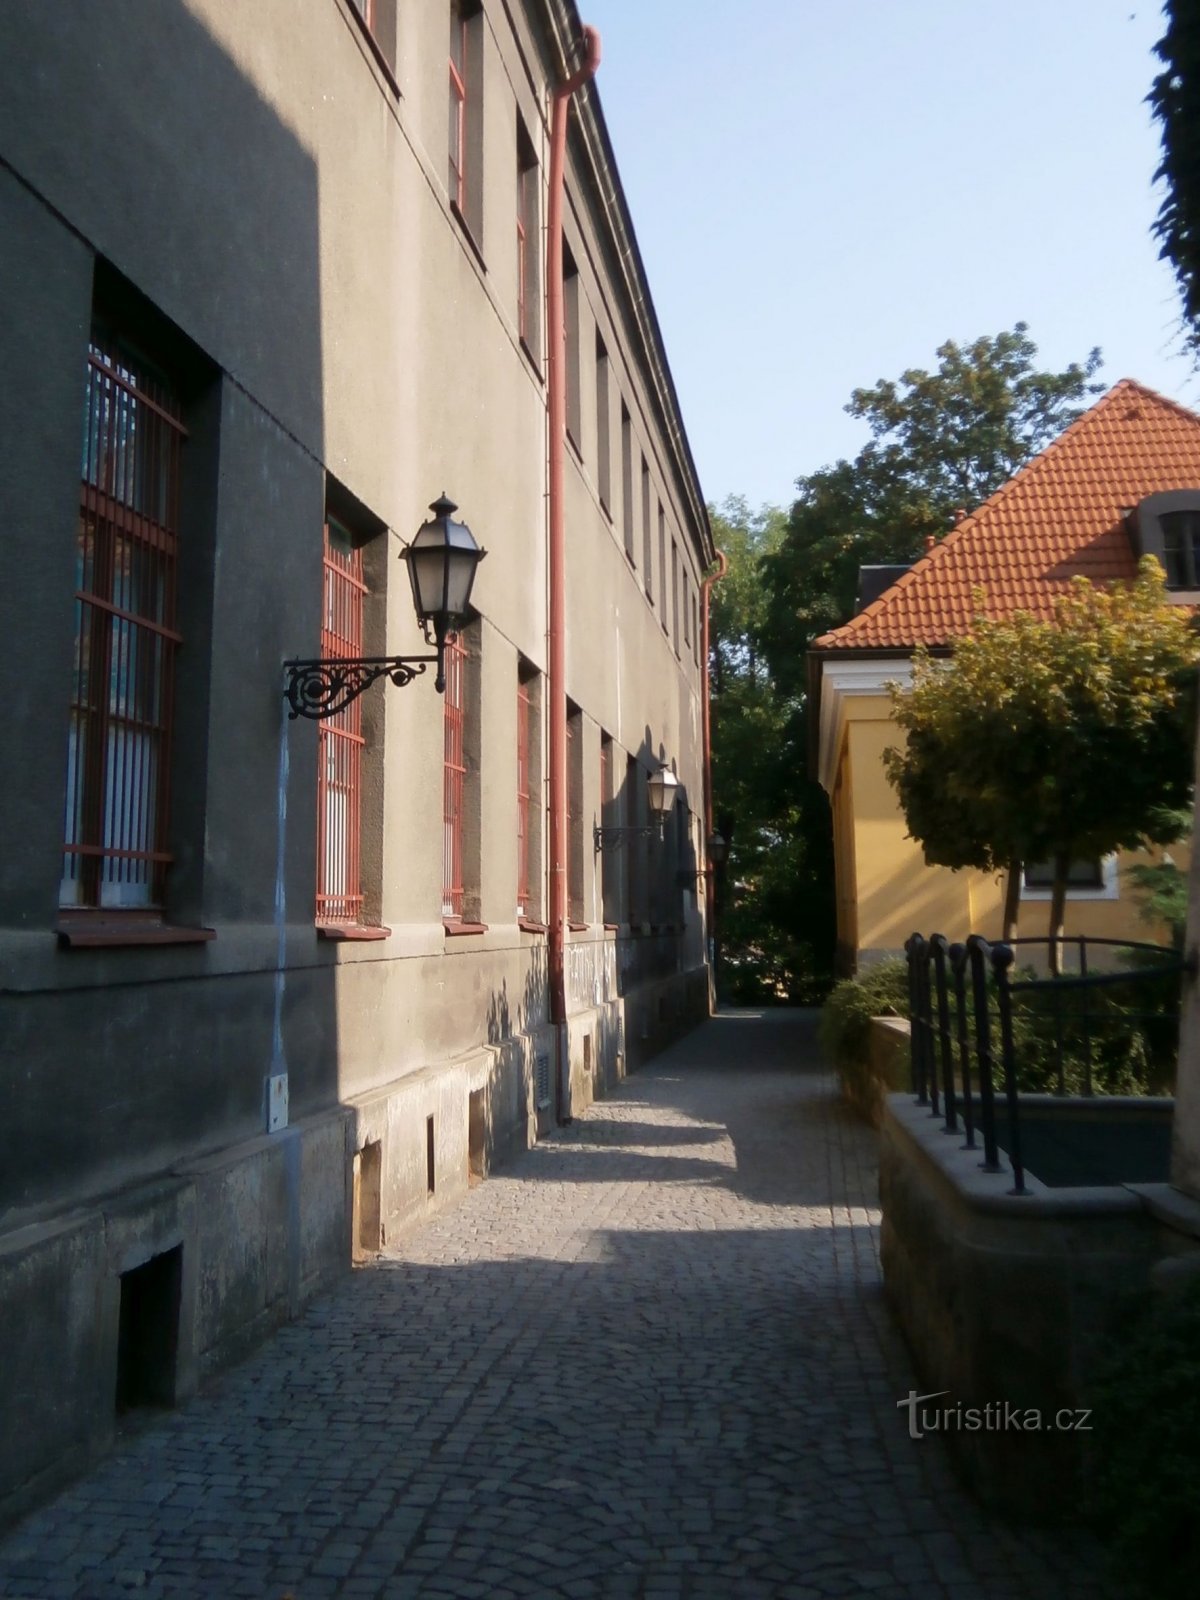 Radoušova Street (Hradec Králové, 19.7.2014. juli XNUMX)